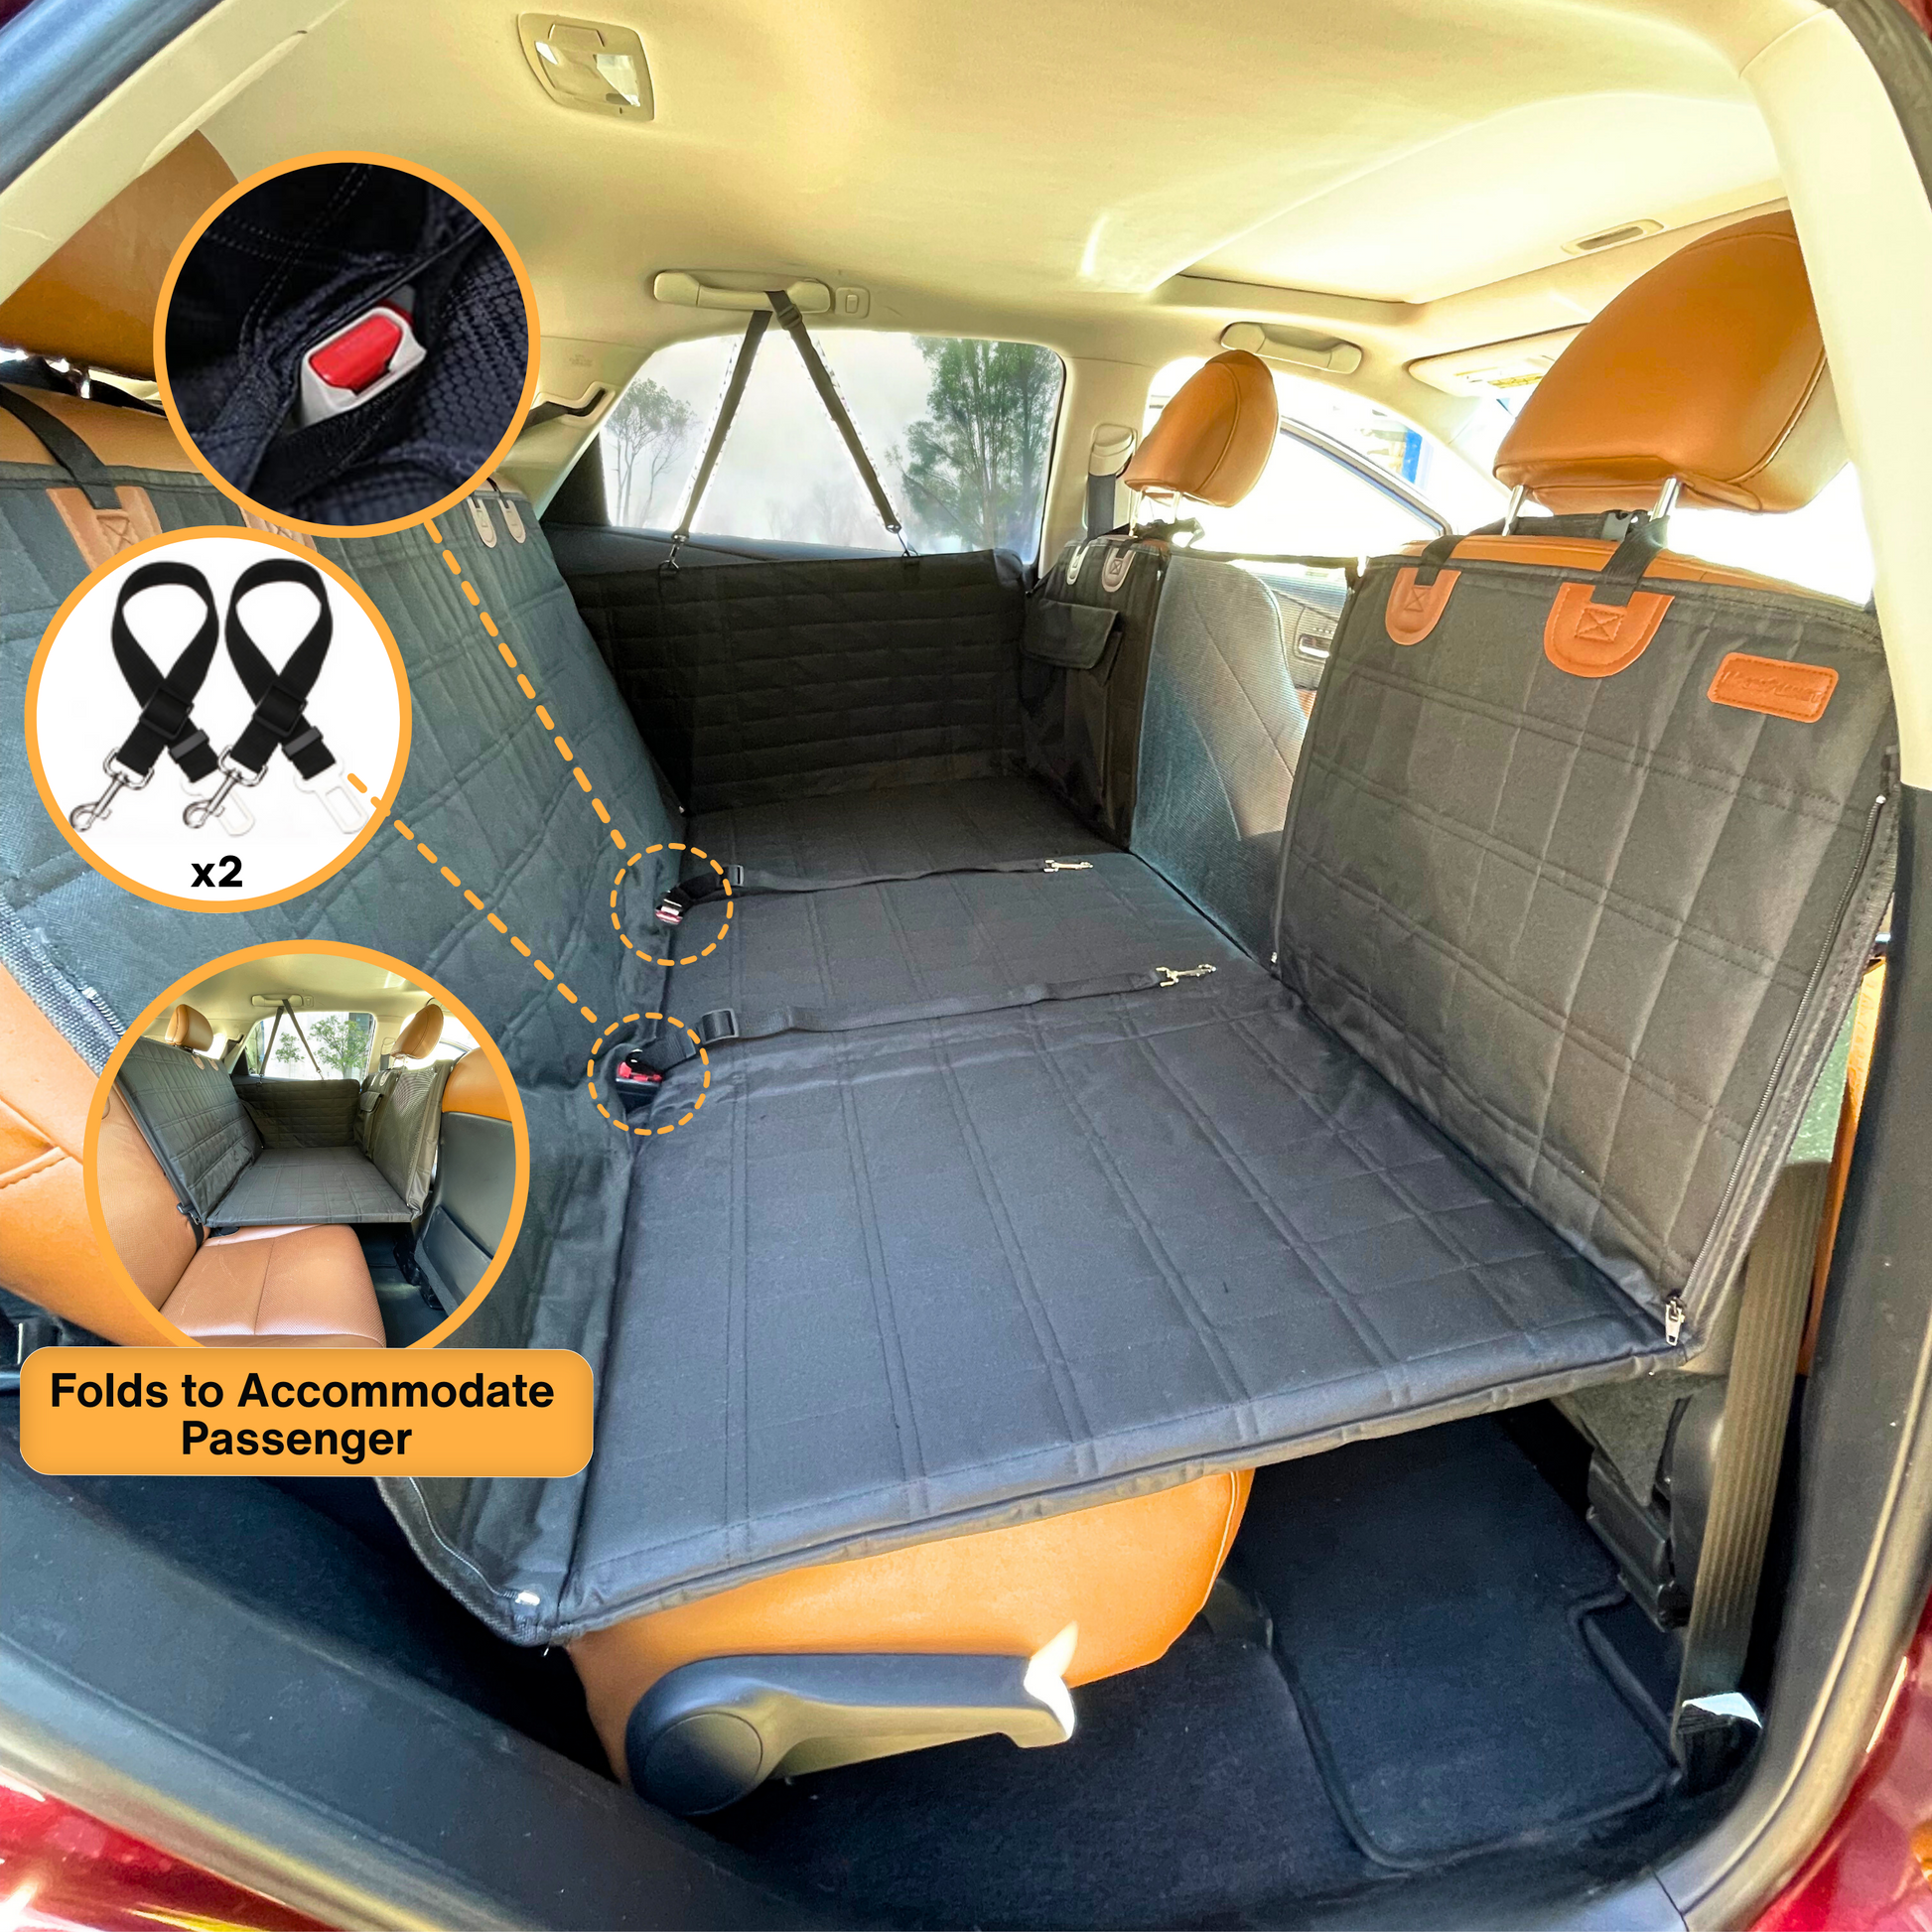  Backseat Extender For Dogs - Waterproof Back Seat Bridge For  Cars, Trucks, SUVs And Sedans - Seat Extender